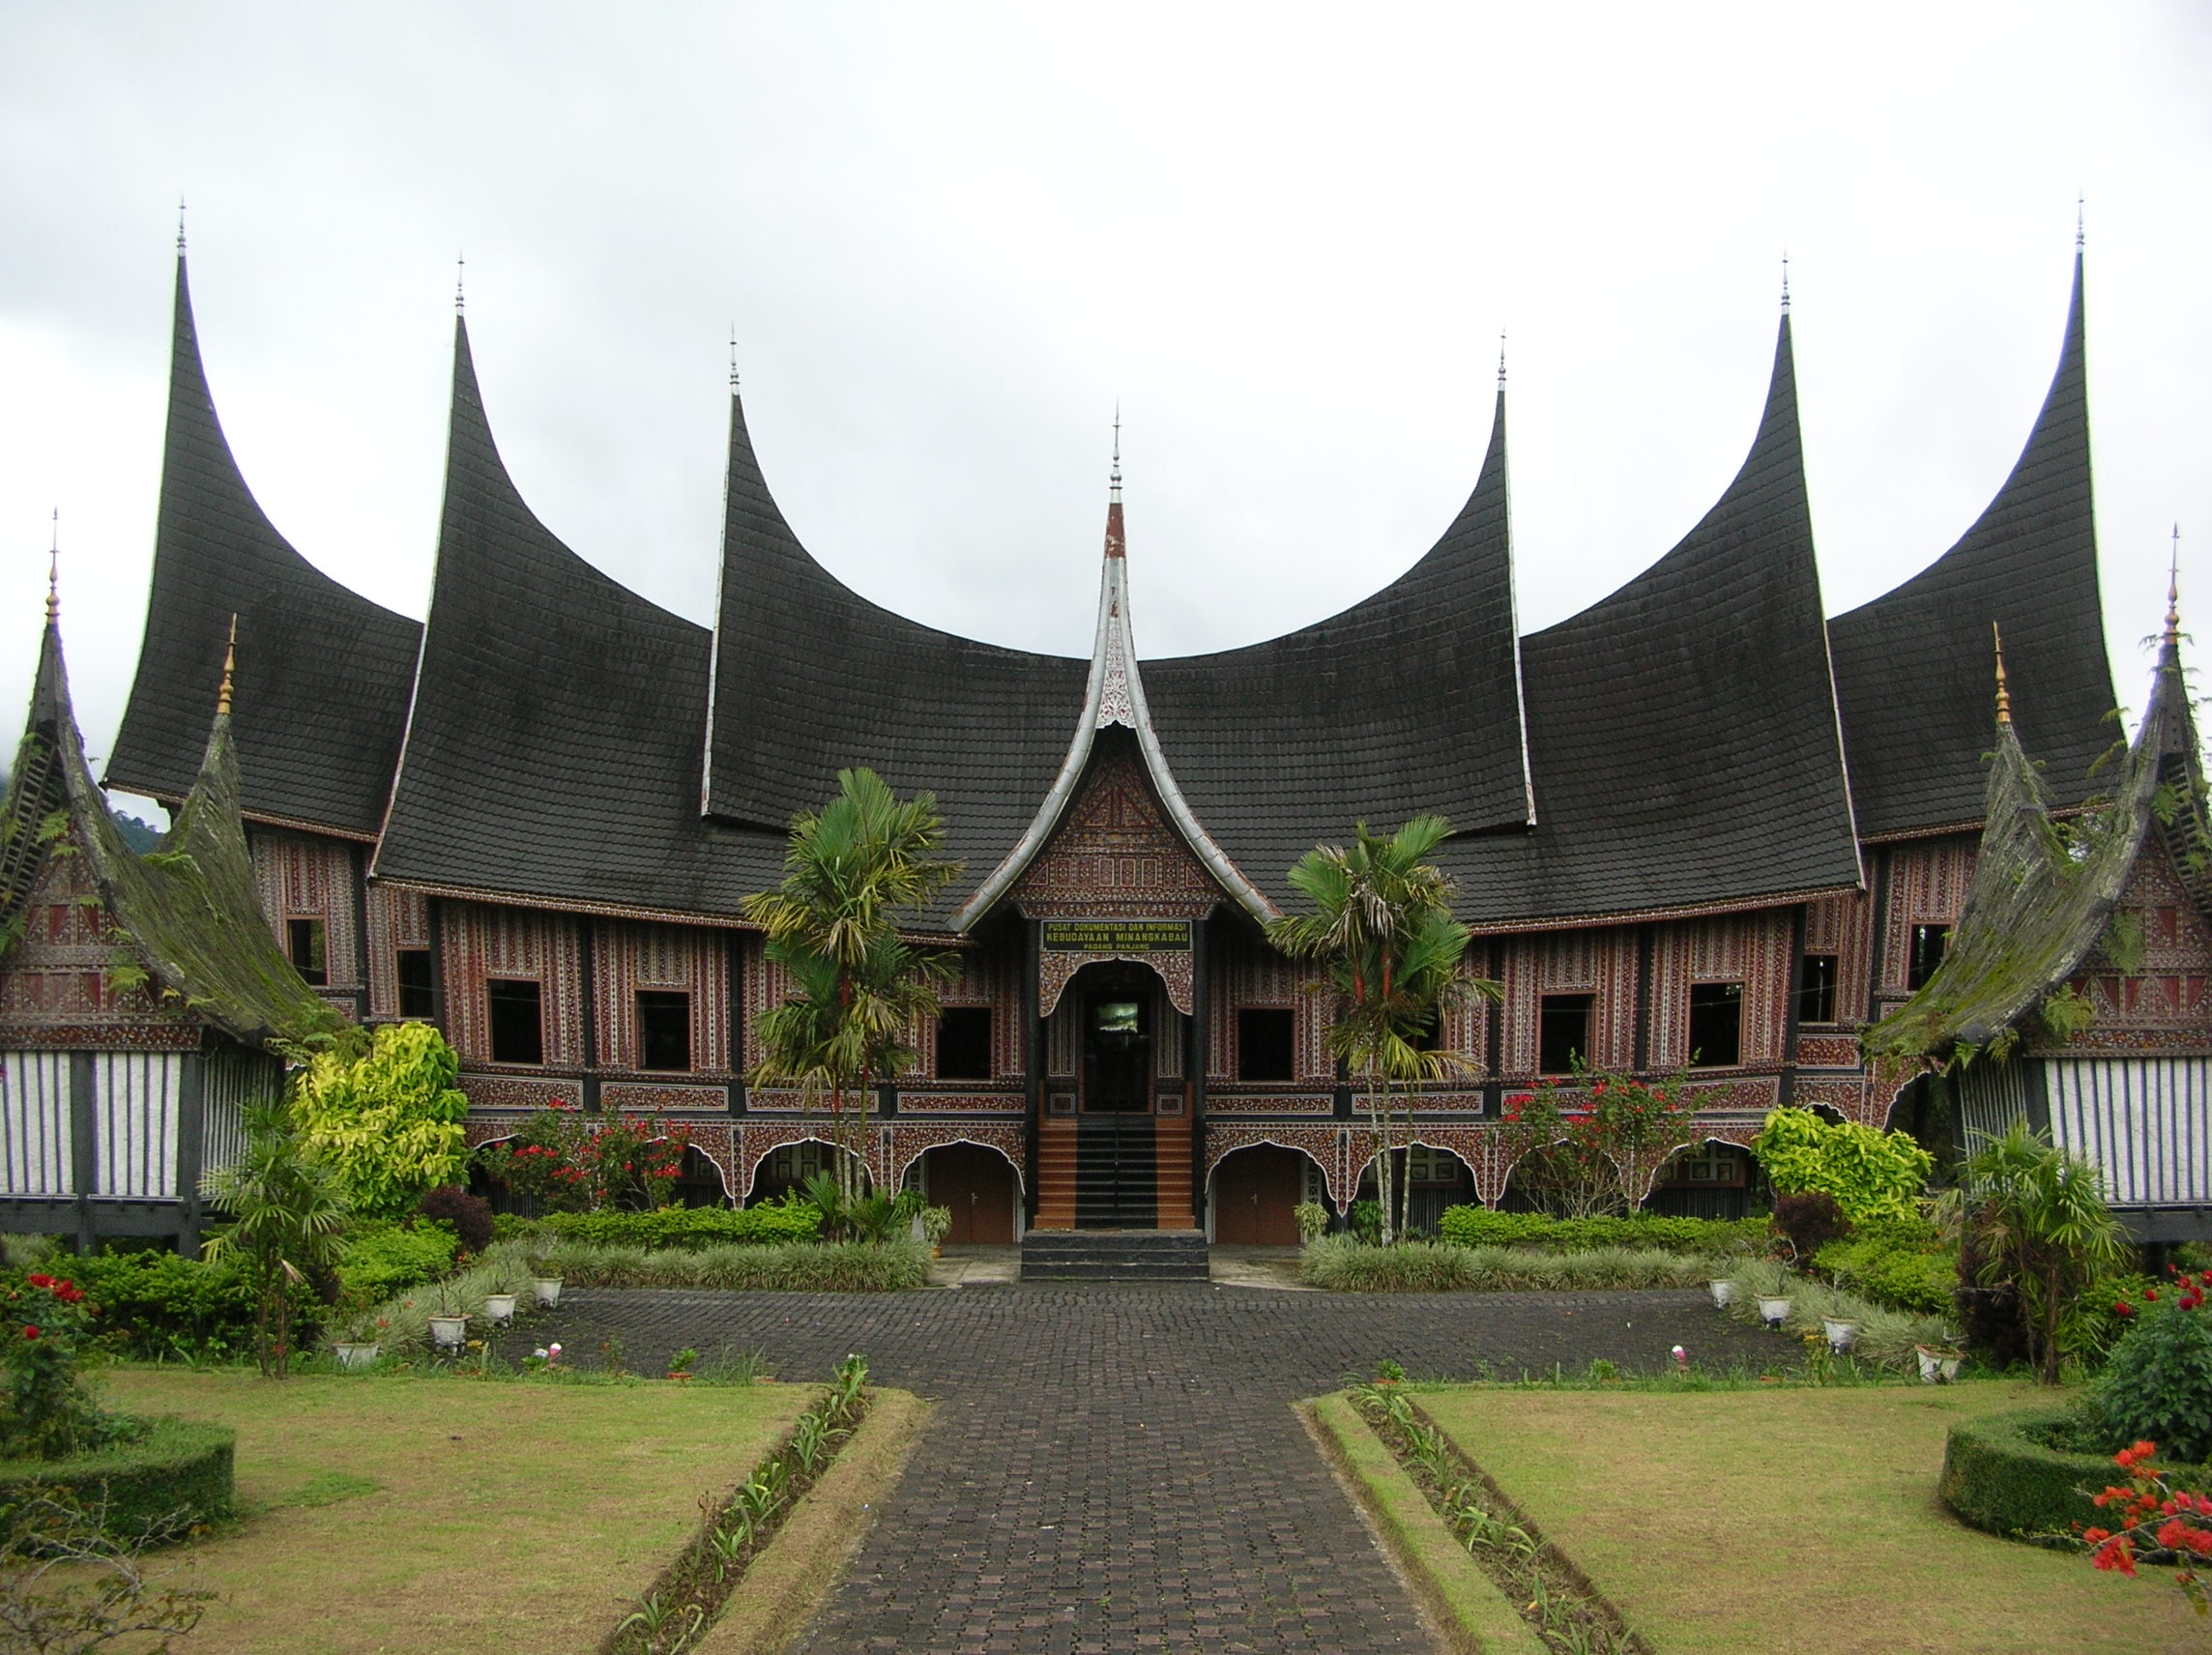 Download this Rumah Gadang Minangkabau Sumber Foto Hendraxsap Wordpress picture